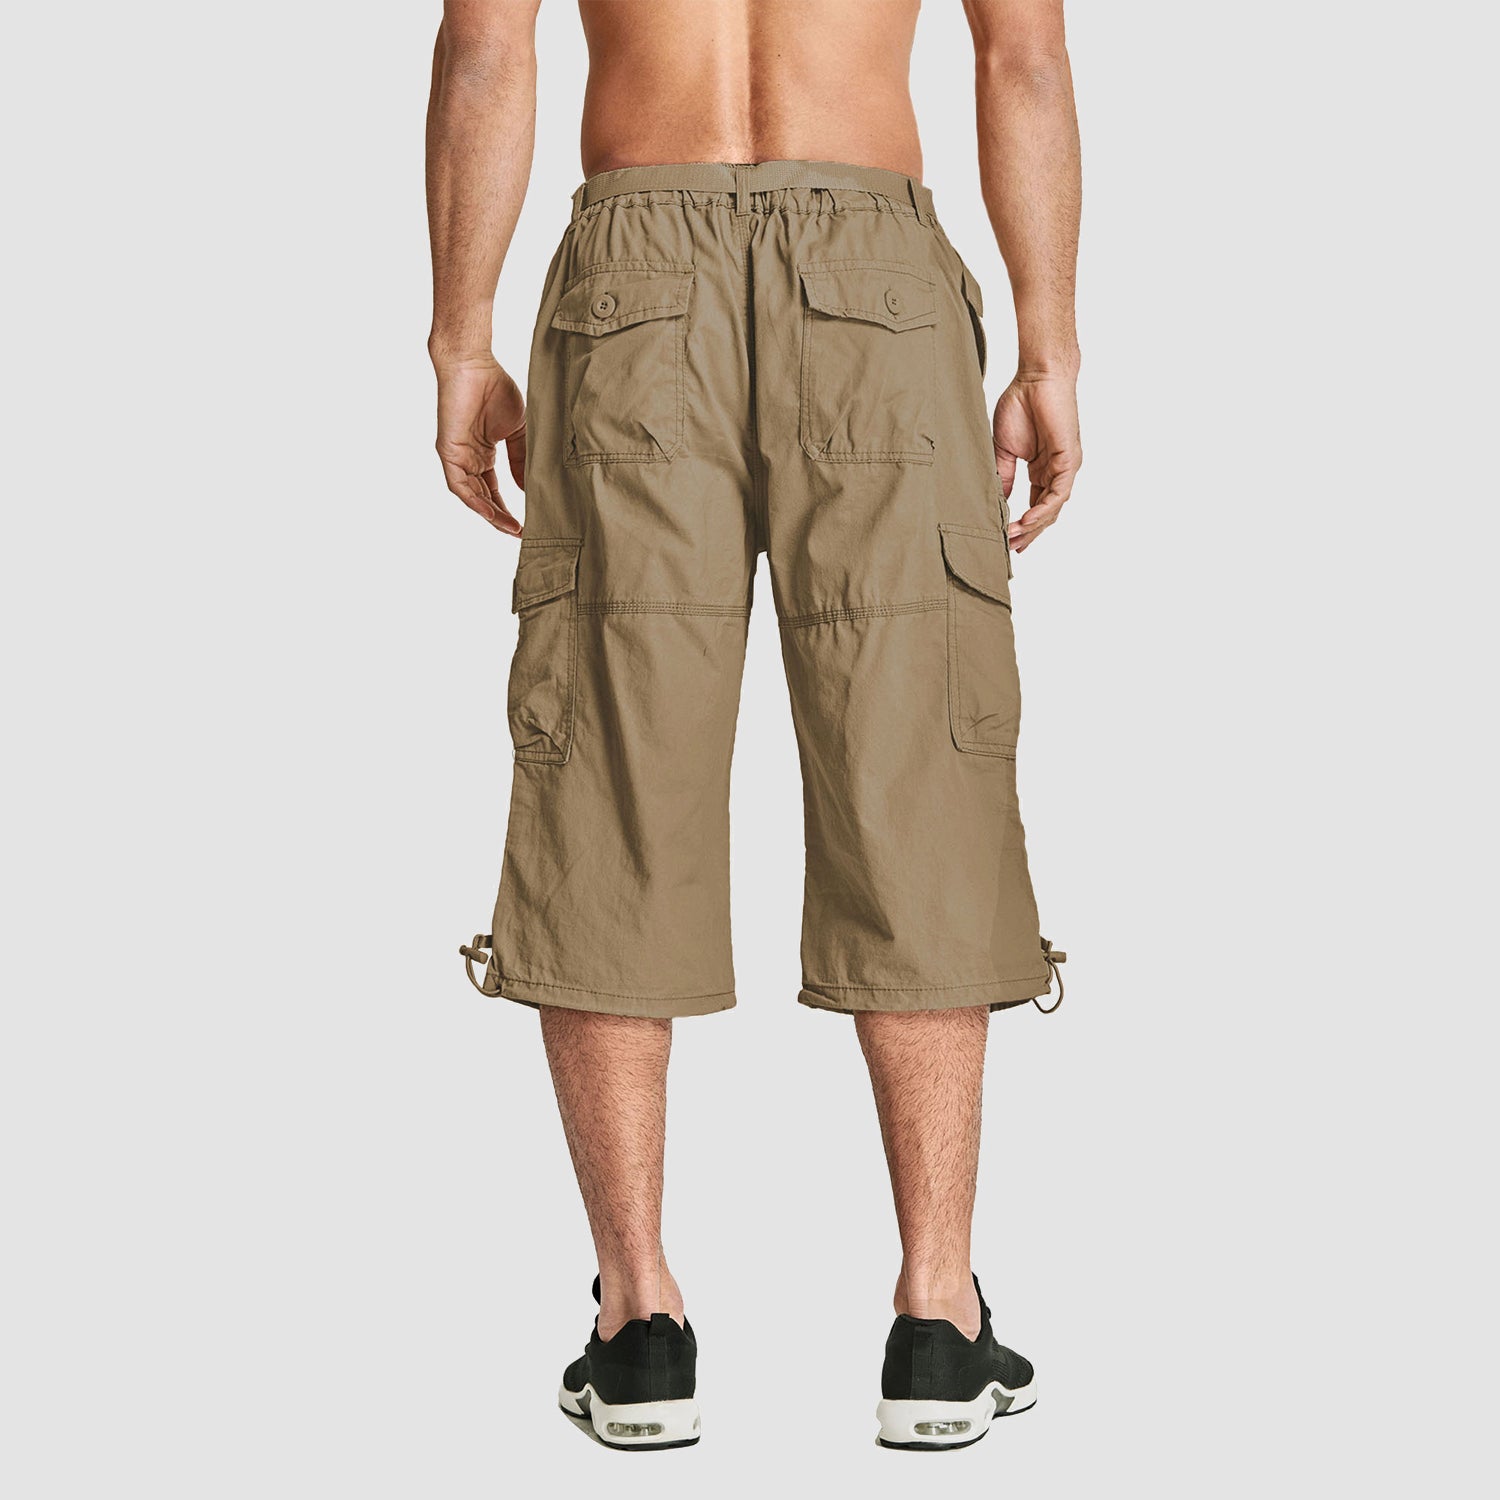 adviicd cotton Shorts Men Men's Capri Long Twill Cargo Shorts